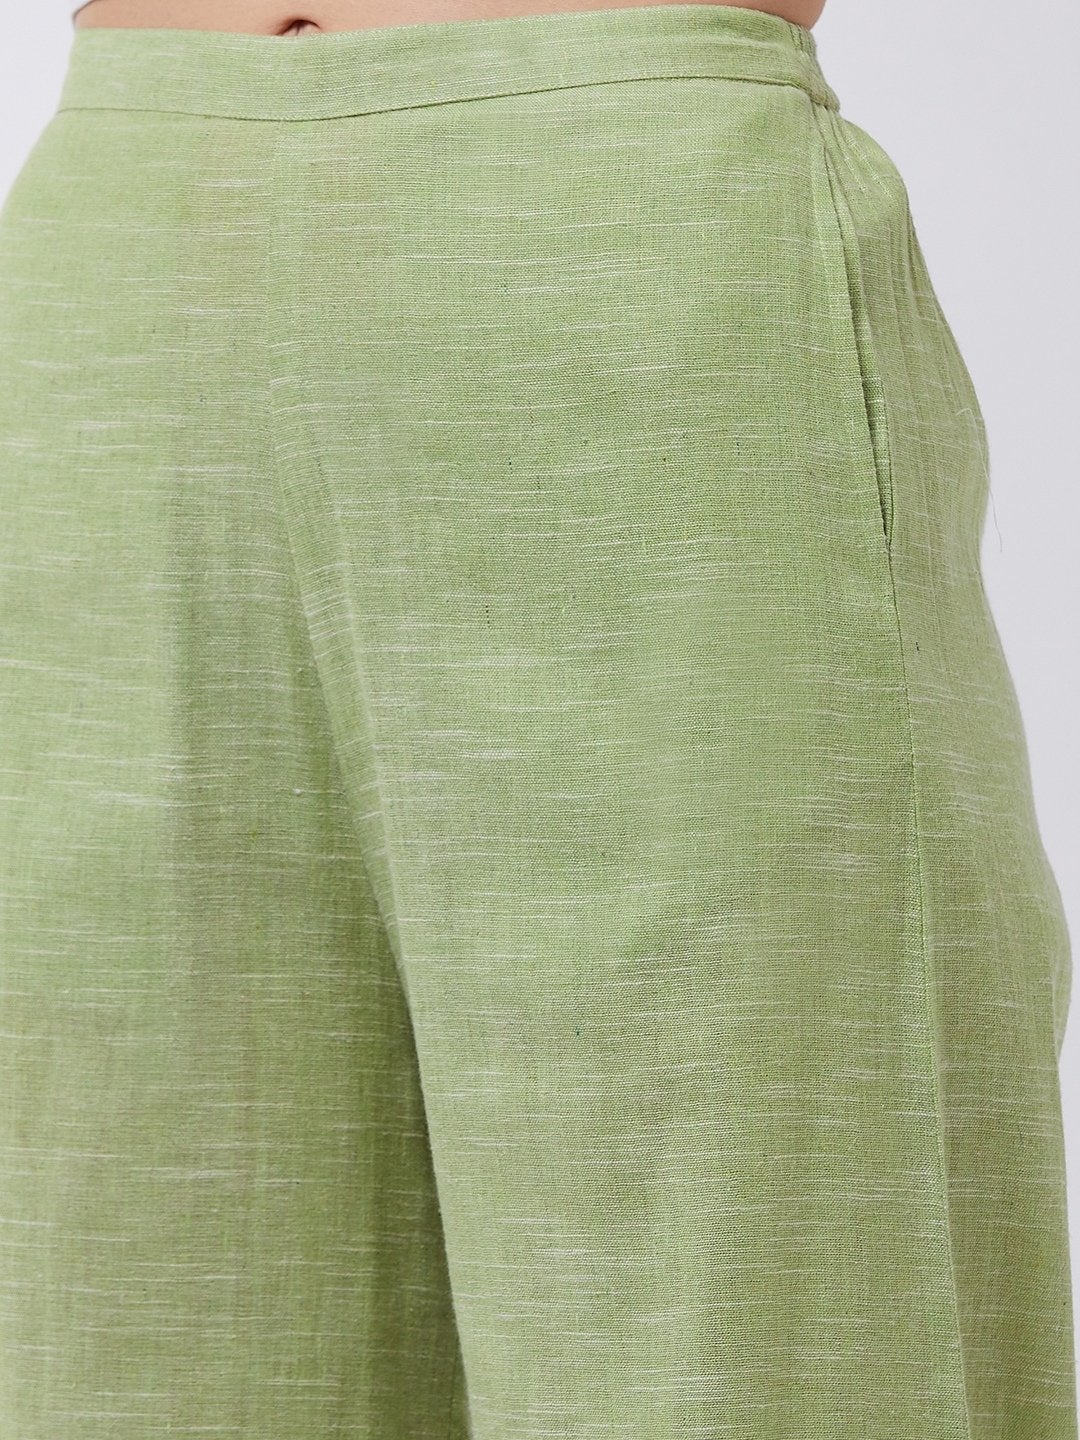 Women's Solid Pastel Blazer And Pant Set - Pannkh